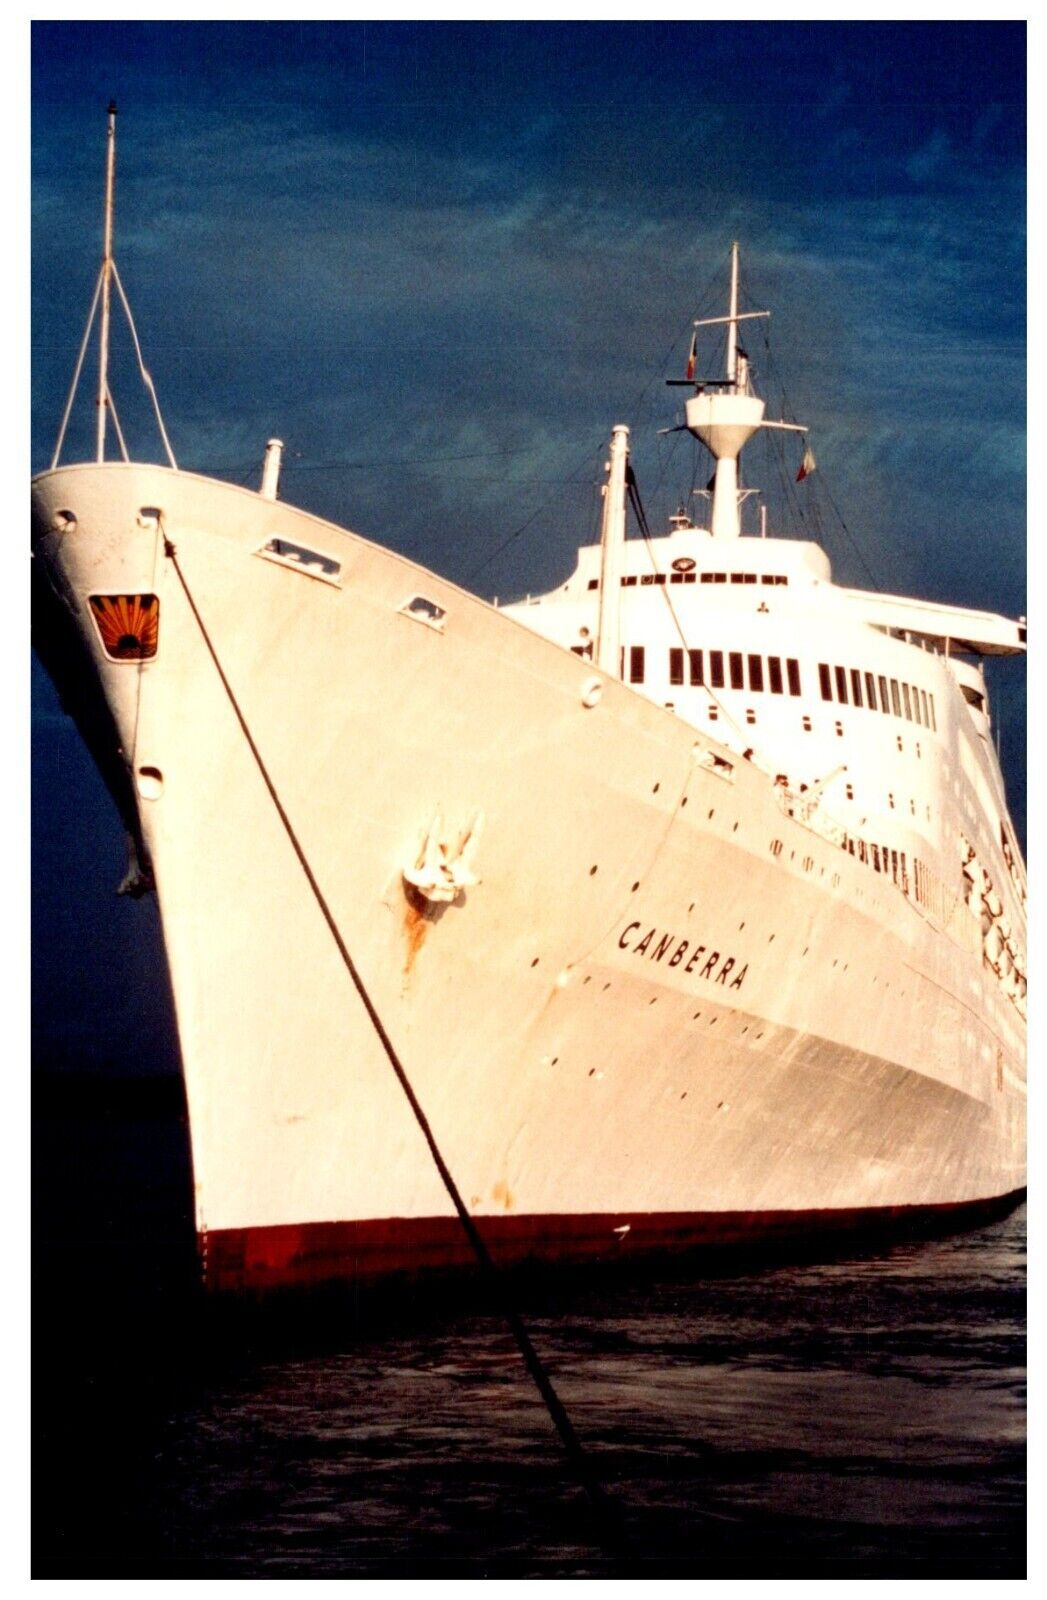 Canberra Cruise Ship P&O Fleet Orient Line Vintage Photograph 4\